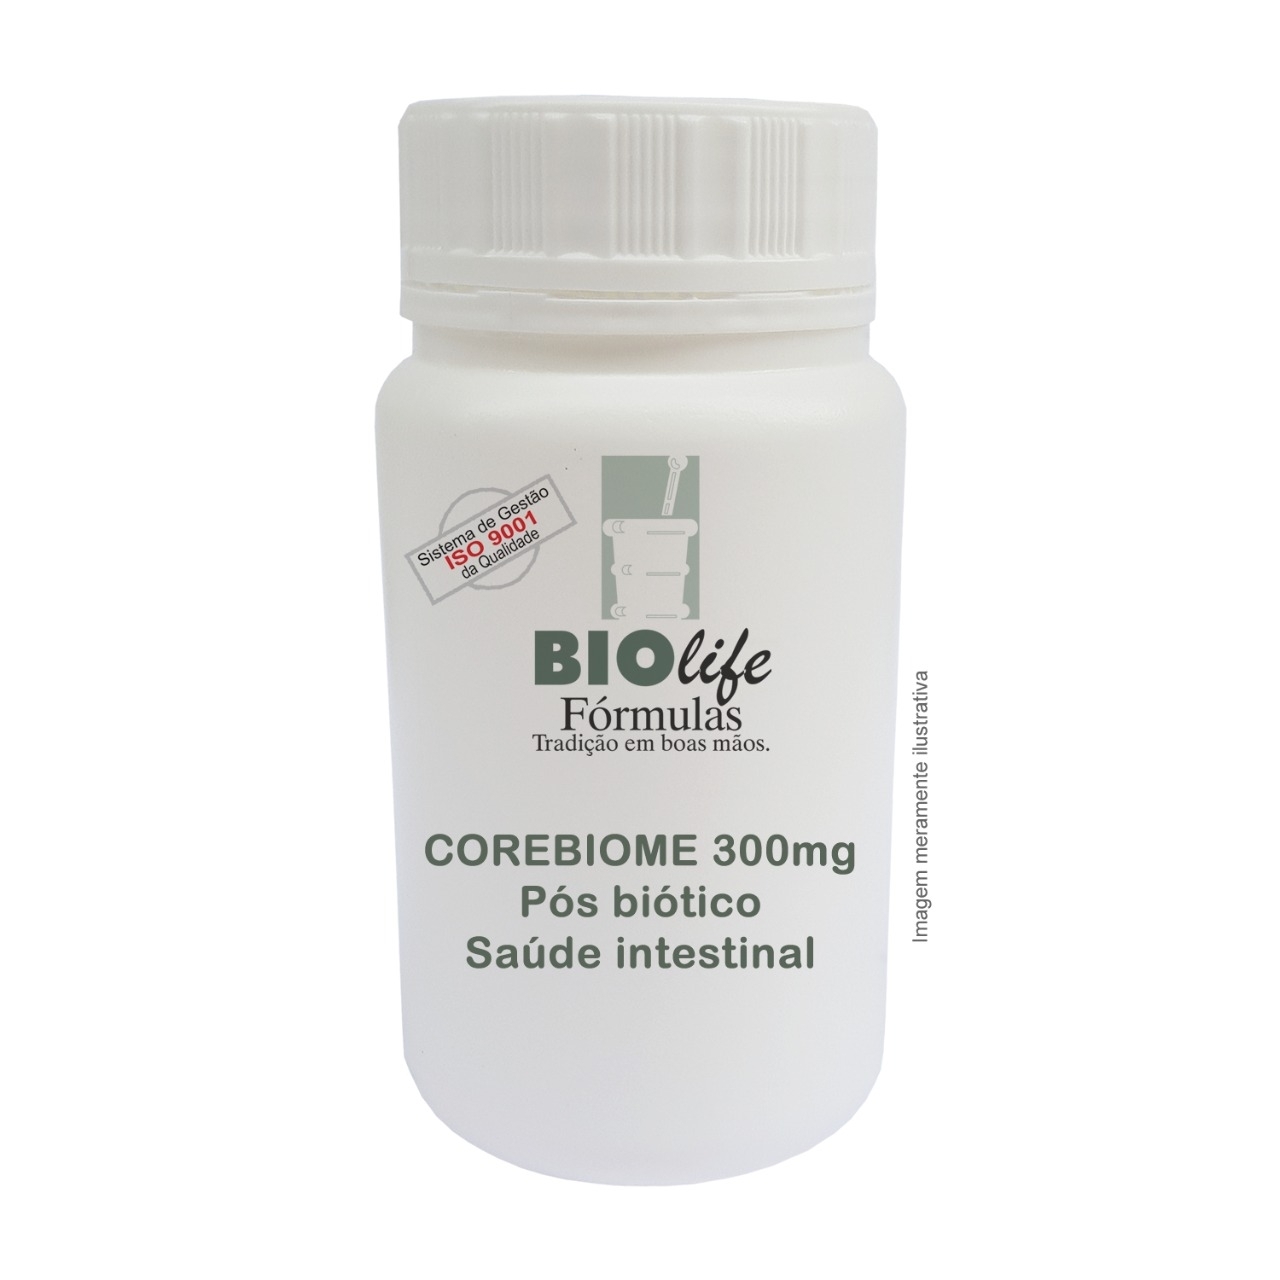 COREBIOME - Pós biótico - Saúde intestinal - BioLife